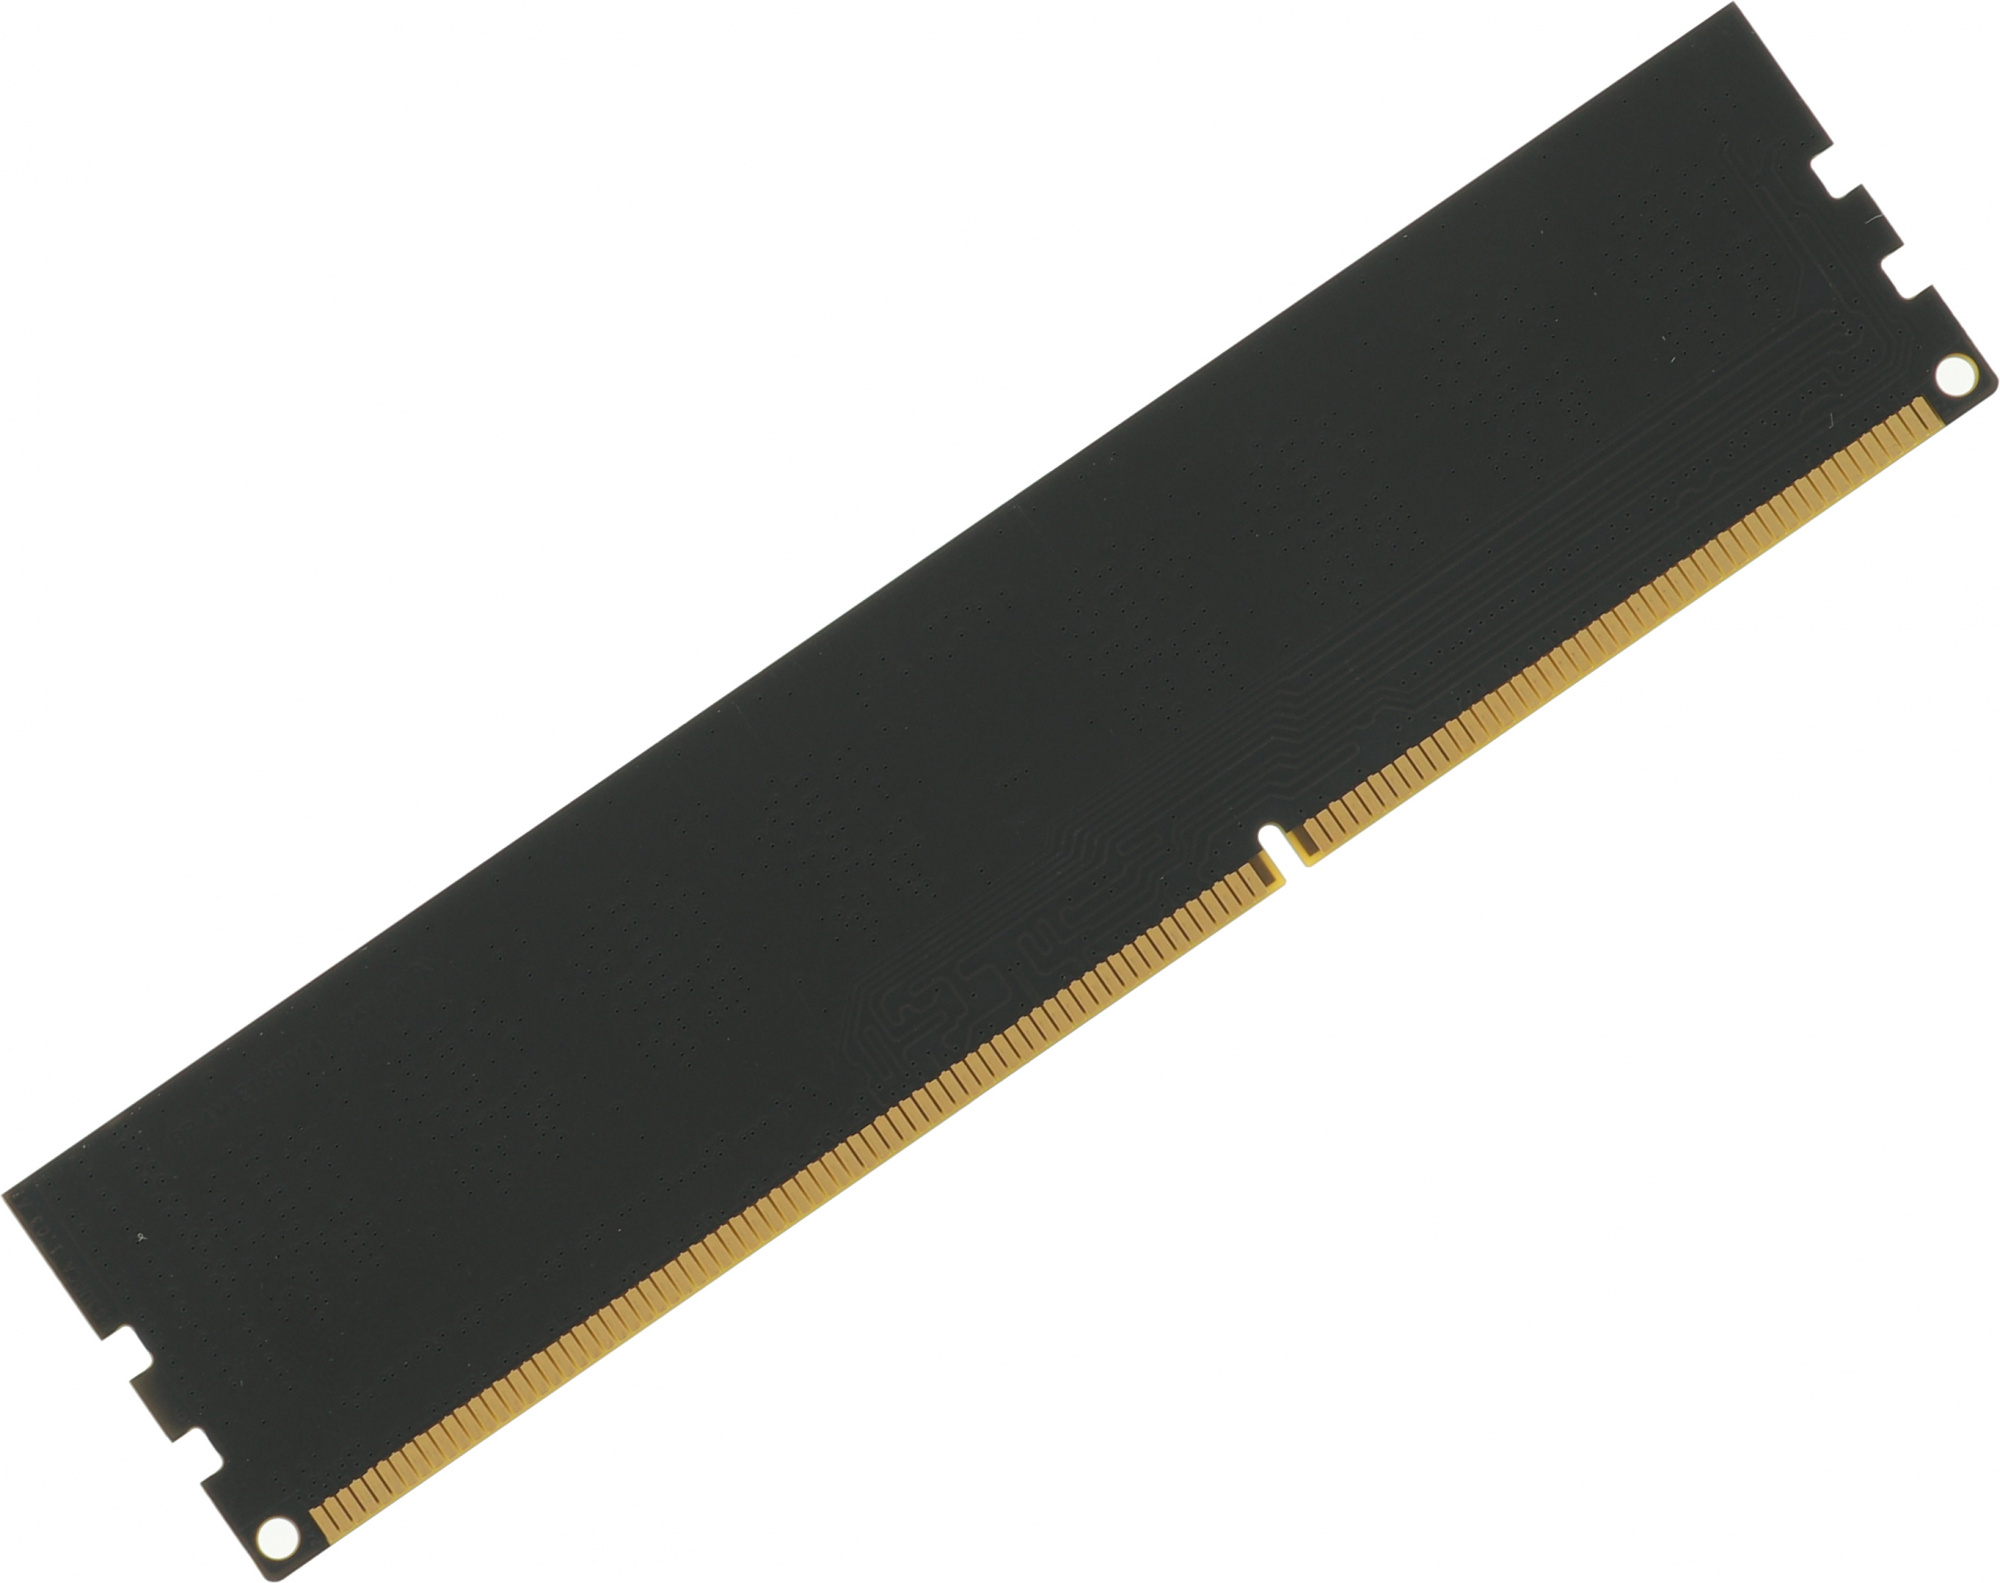 Память KIMTIGO DDR3 4Gb 1600MHz RTL PC4-21300 (KMTU4G8581600)